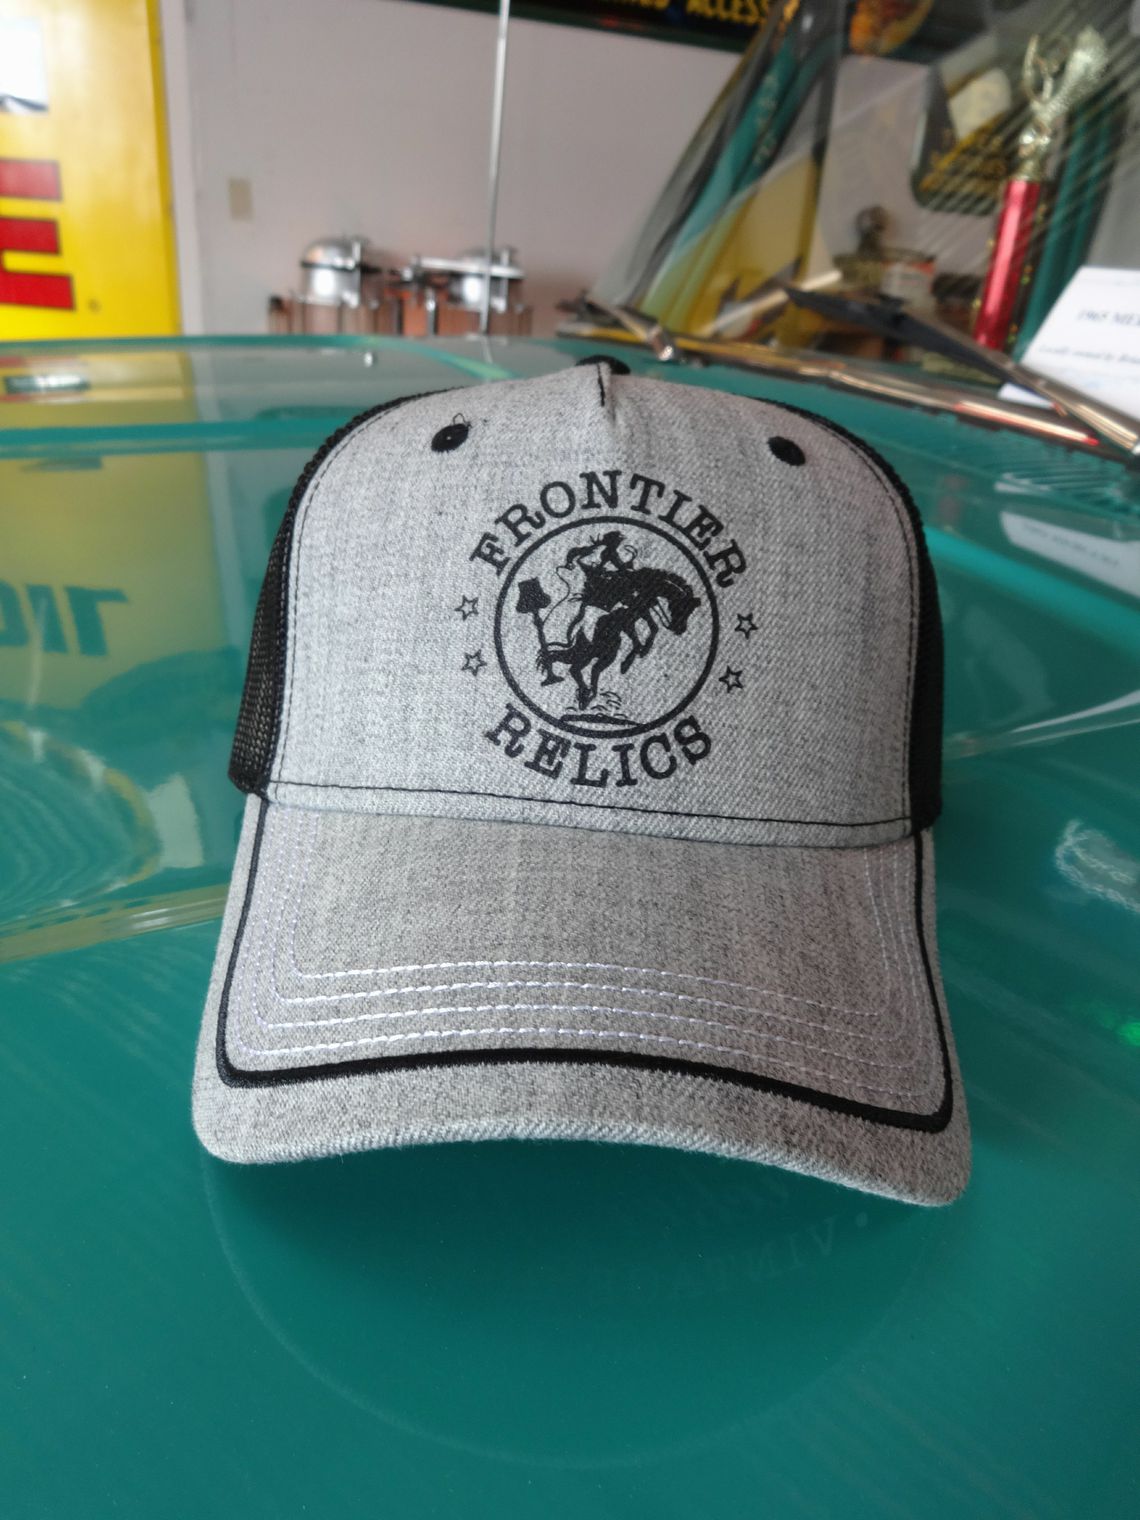 Grey Frontier Relics hat with black mesh